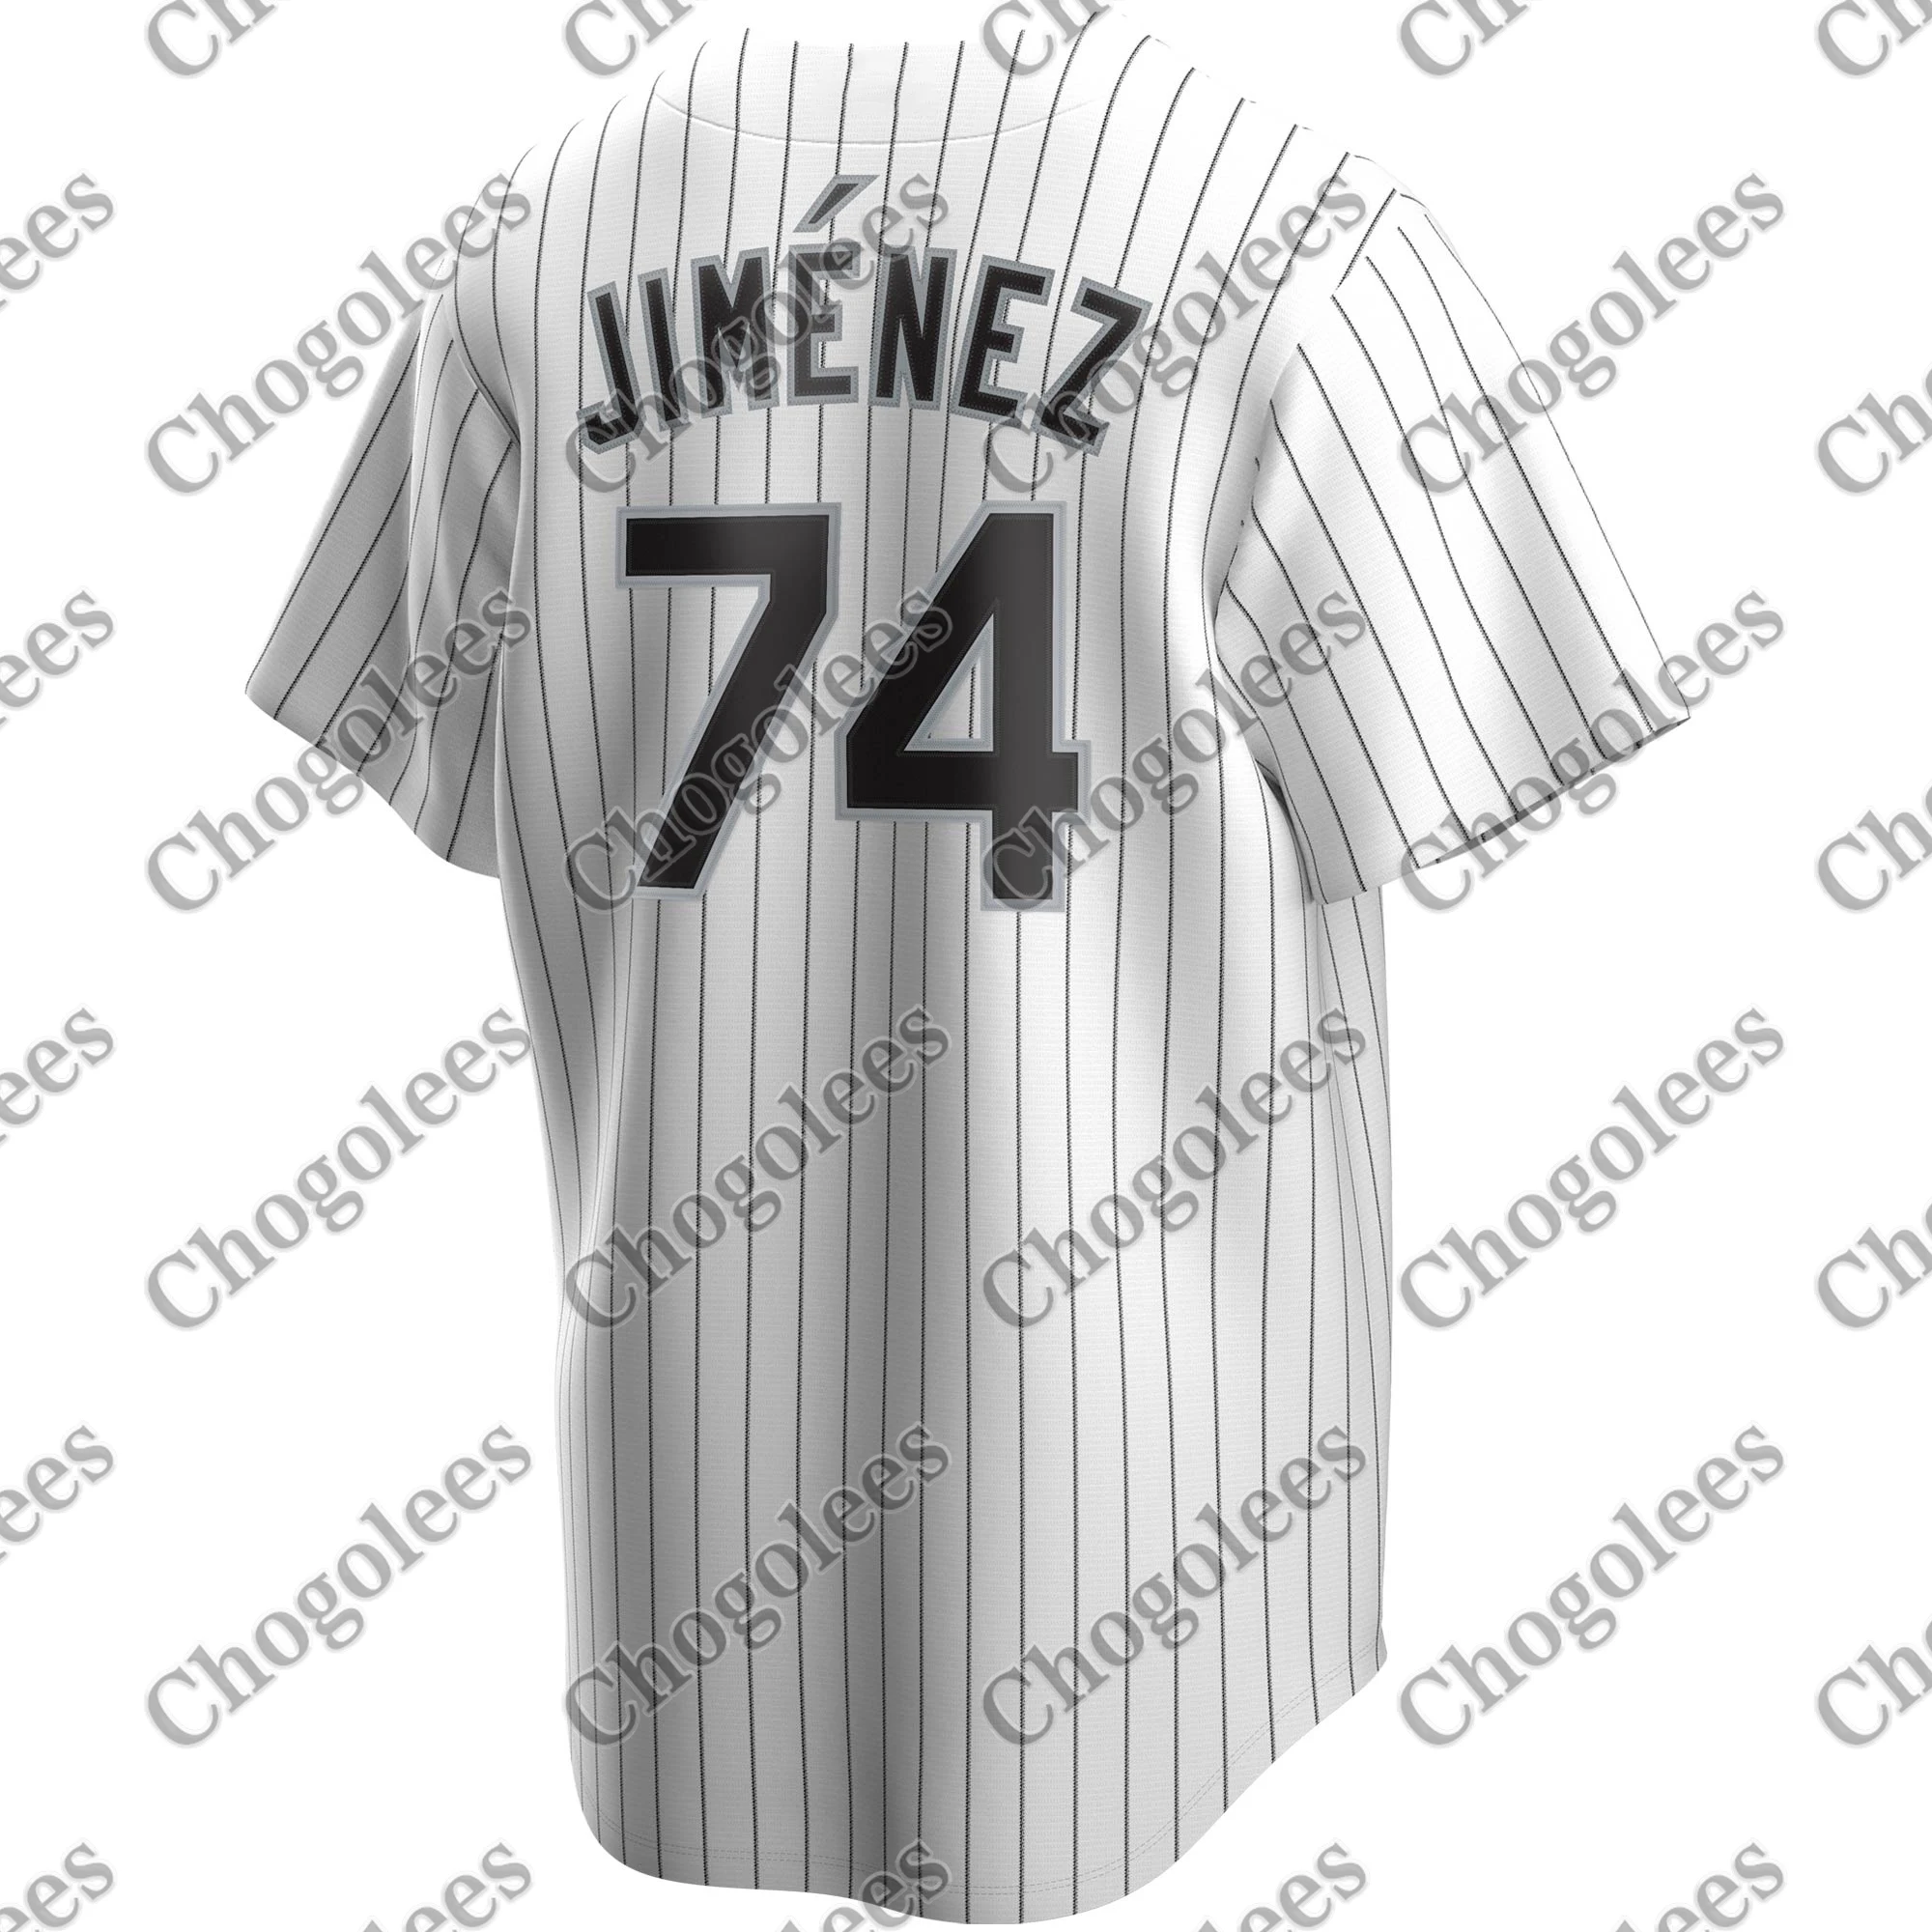 

Baseball Jersey Eloy Jimenez Chicago Sox Home 2020 Player Jersey